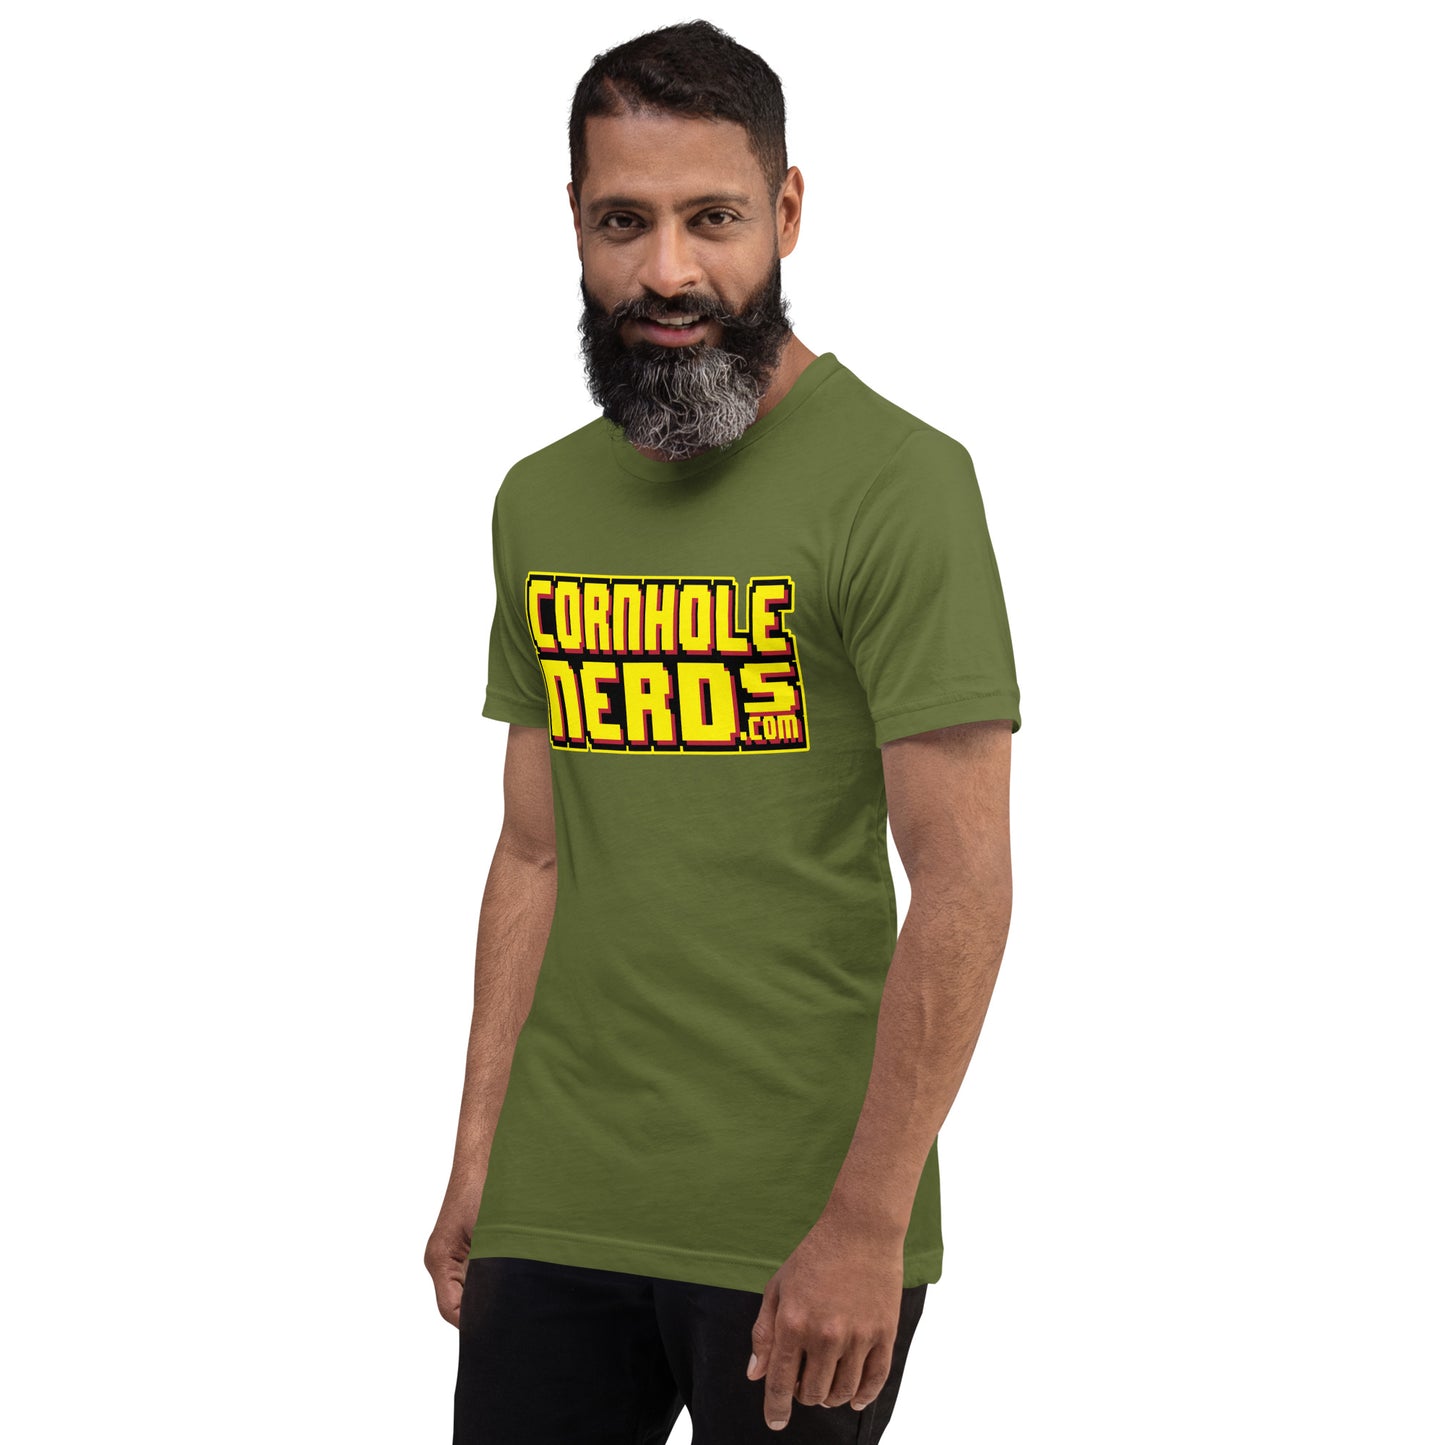 Cornhole Nerds 8-bit Unisex t-shirt